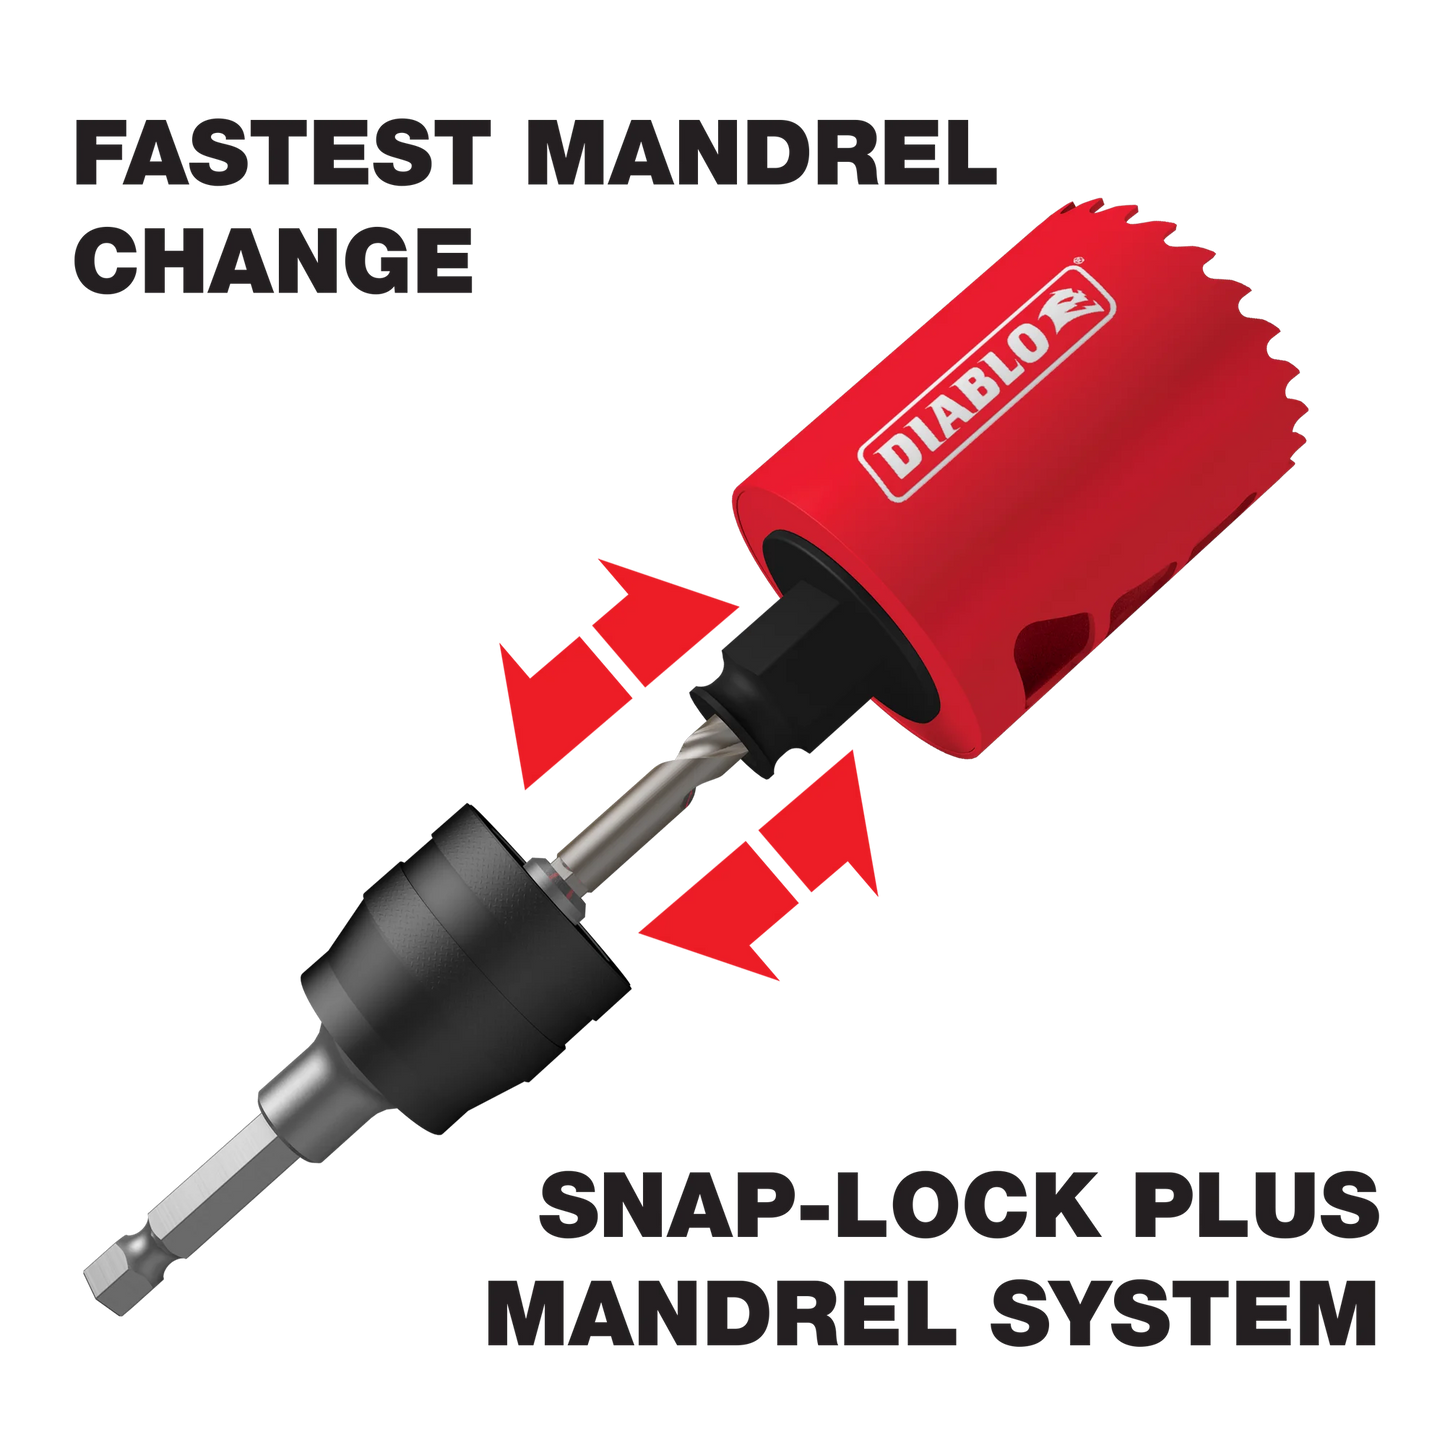 DIABLO 7/16 in. Snap‑Lock Plus™ Mandrel System